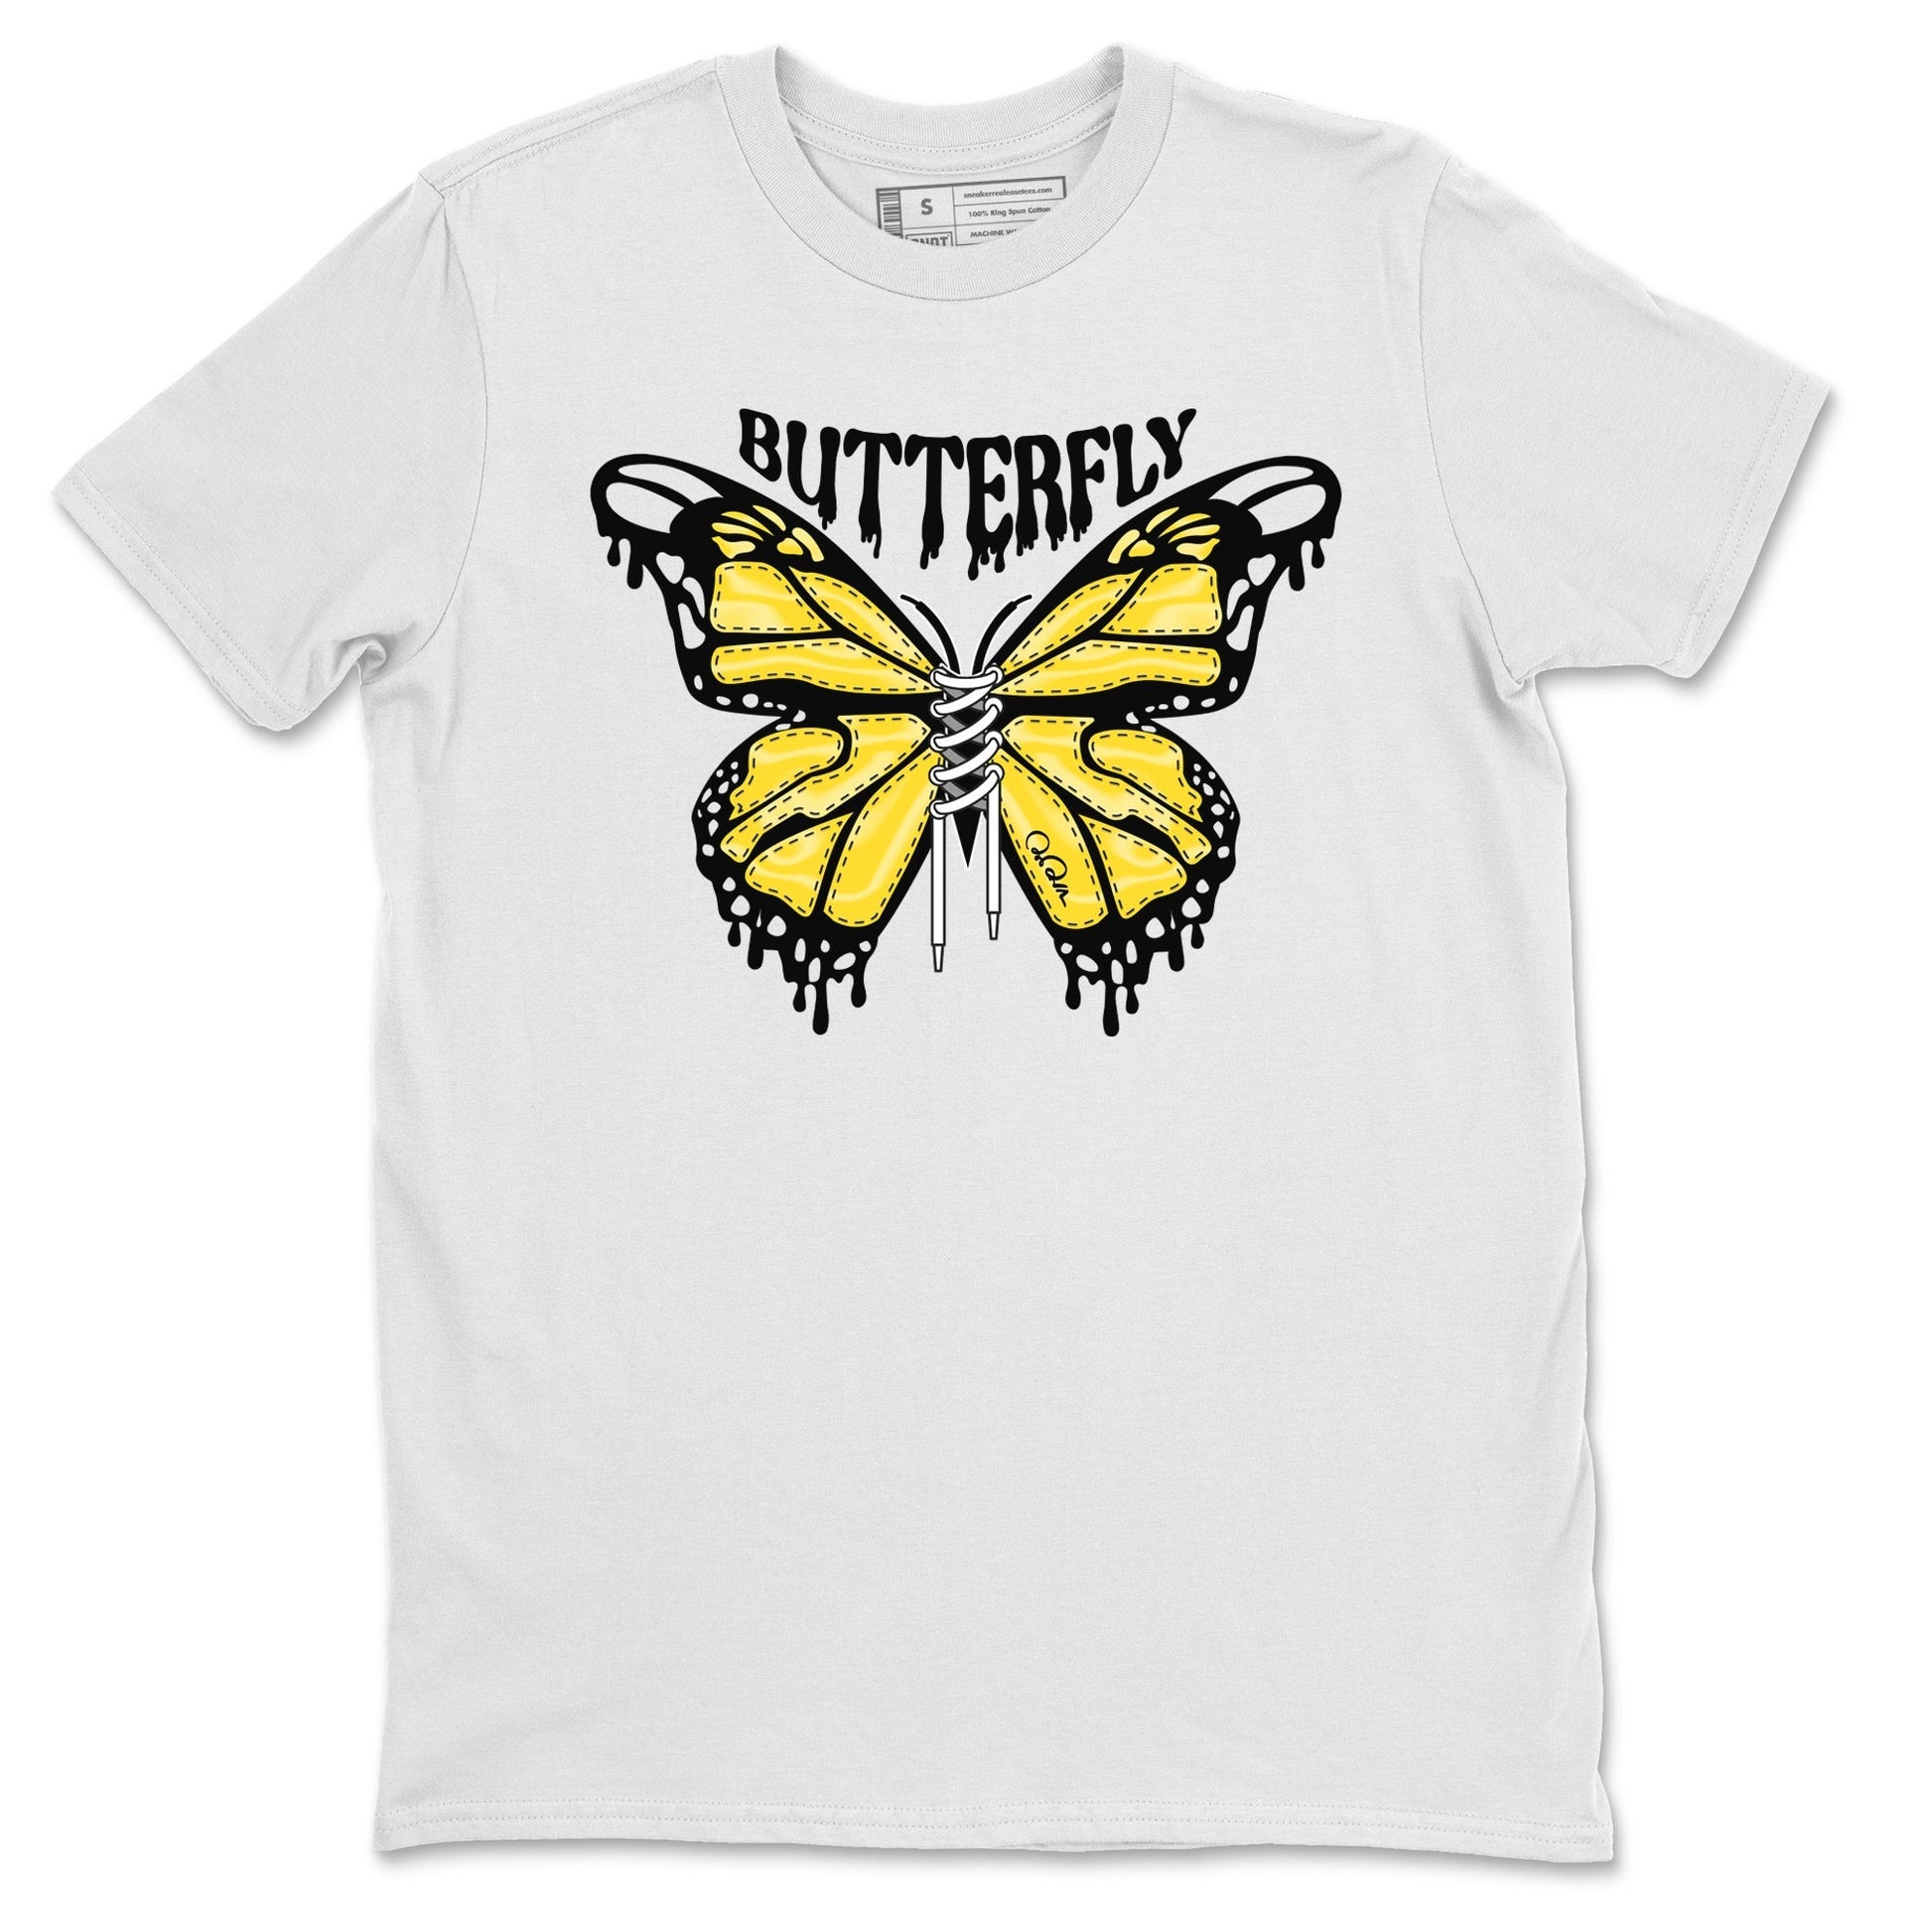 Air Jordan 4 Thunder Sneaker Match Tees Butterfly Sneaker Tees AJ4 Thunder Sneaker Release Tees Unisex Shirts White 2